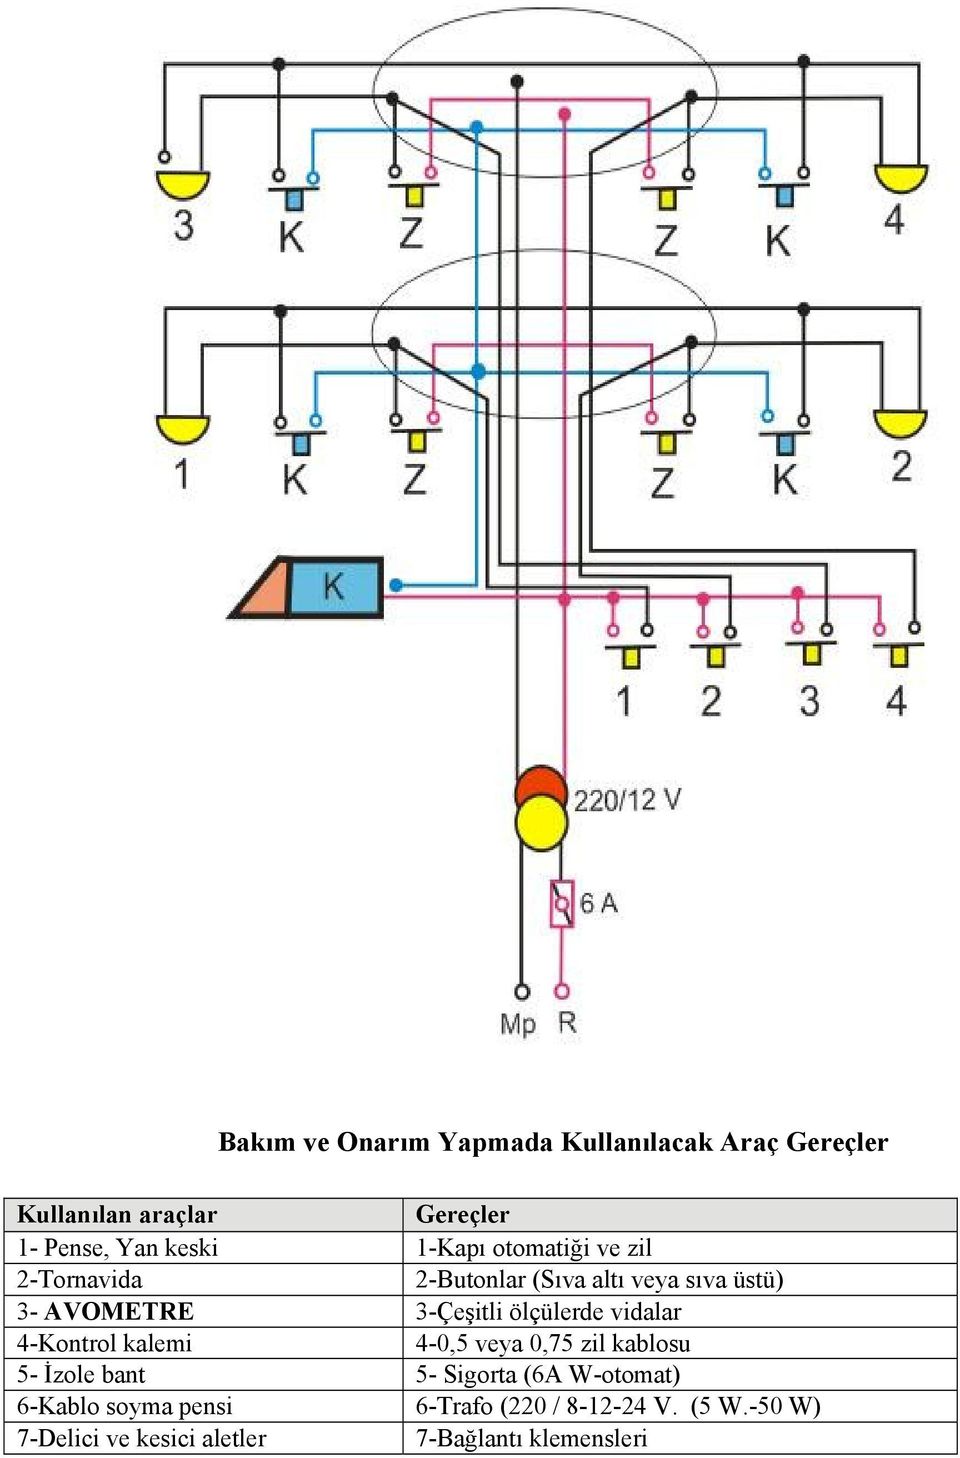 ölçülerde vidalar 4-Kontrol kalemi 4-0,5 veya 0,75 zil kablosu 5- İzole bant 5- Sigorta (6A